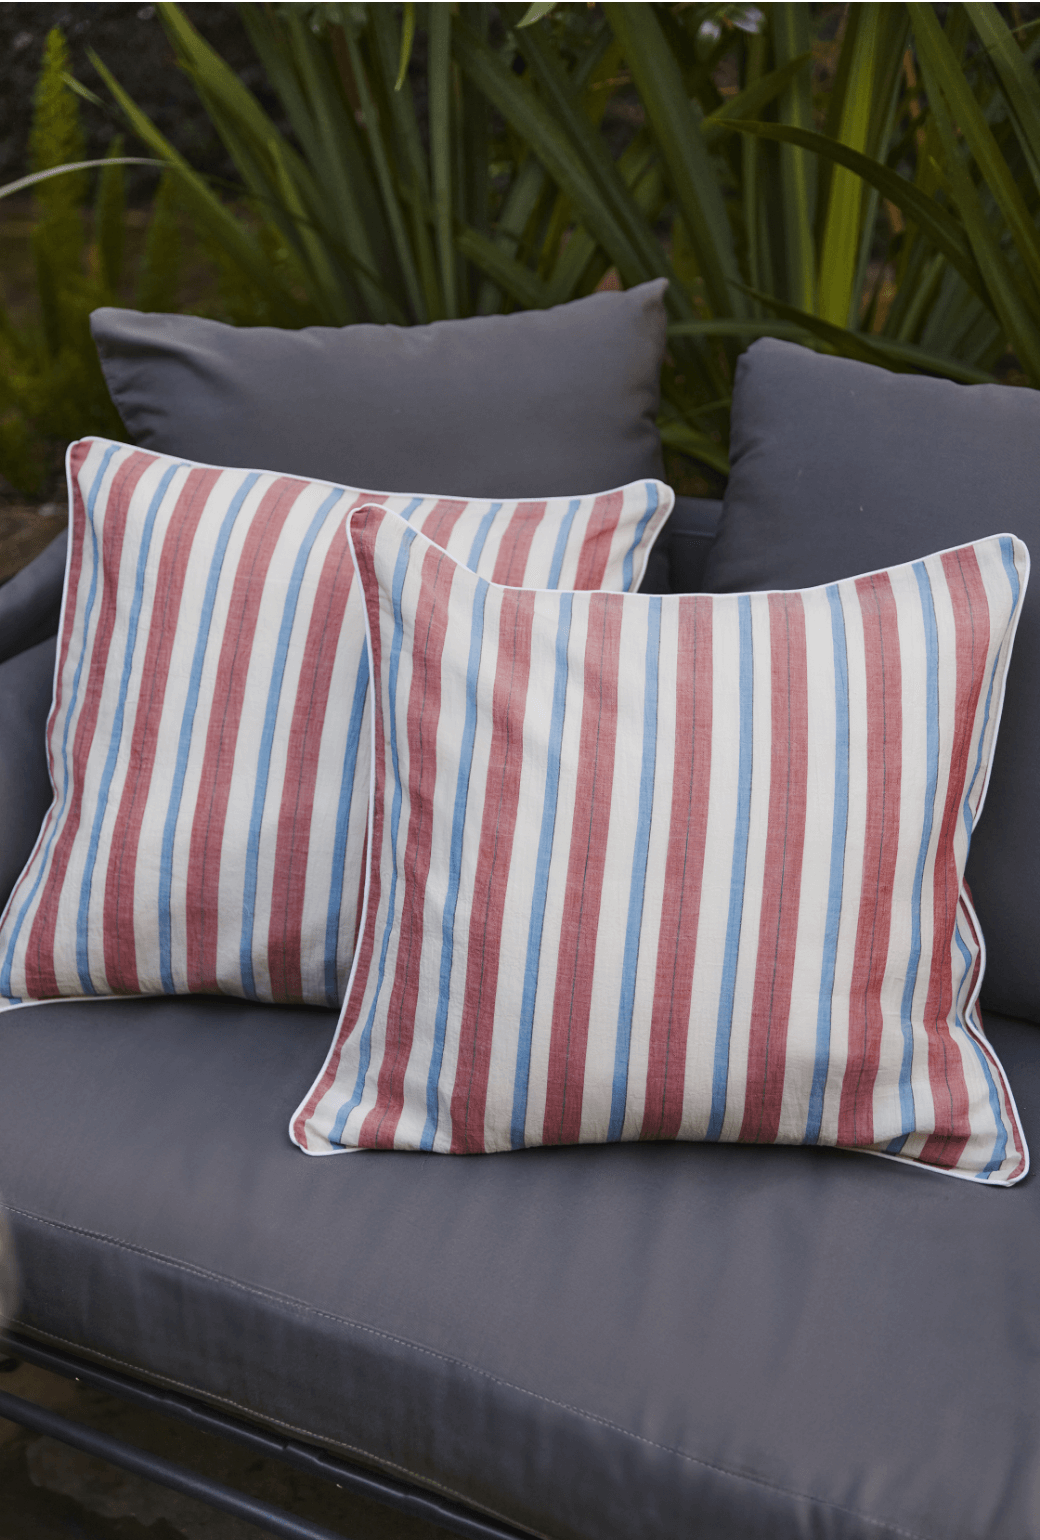 Buru x Jaime Dewberry Pillow Cover Set - RWB Stripe